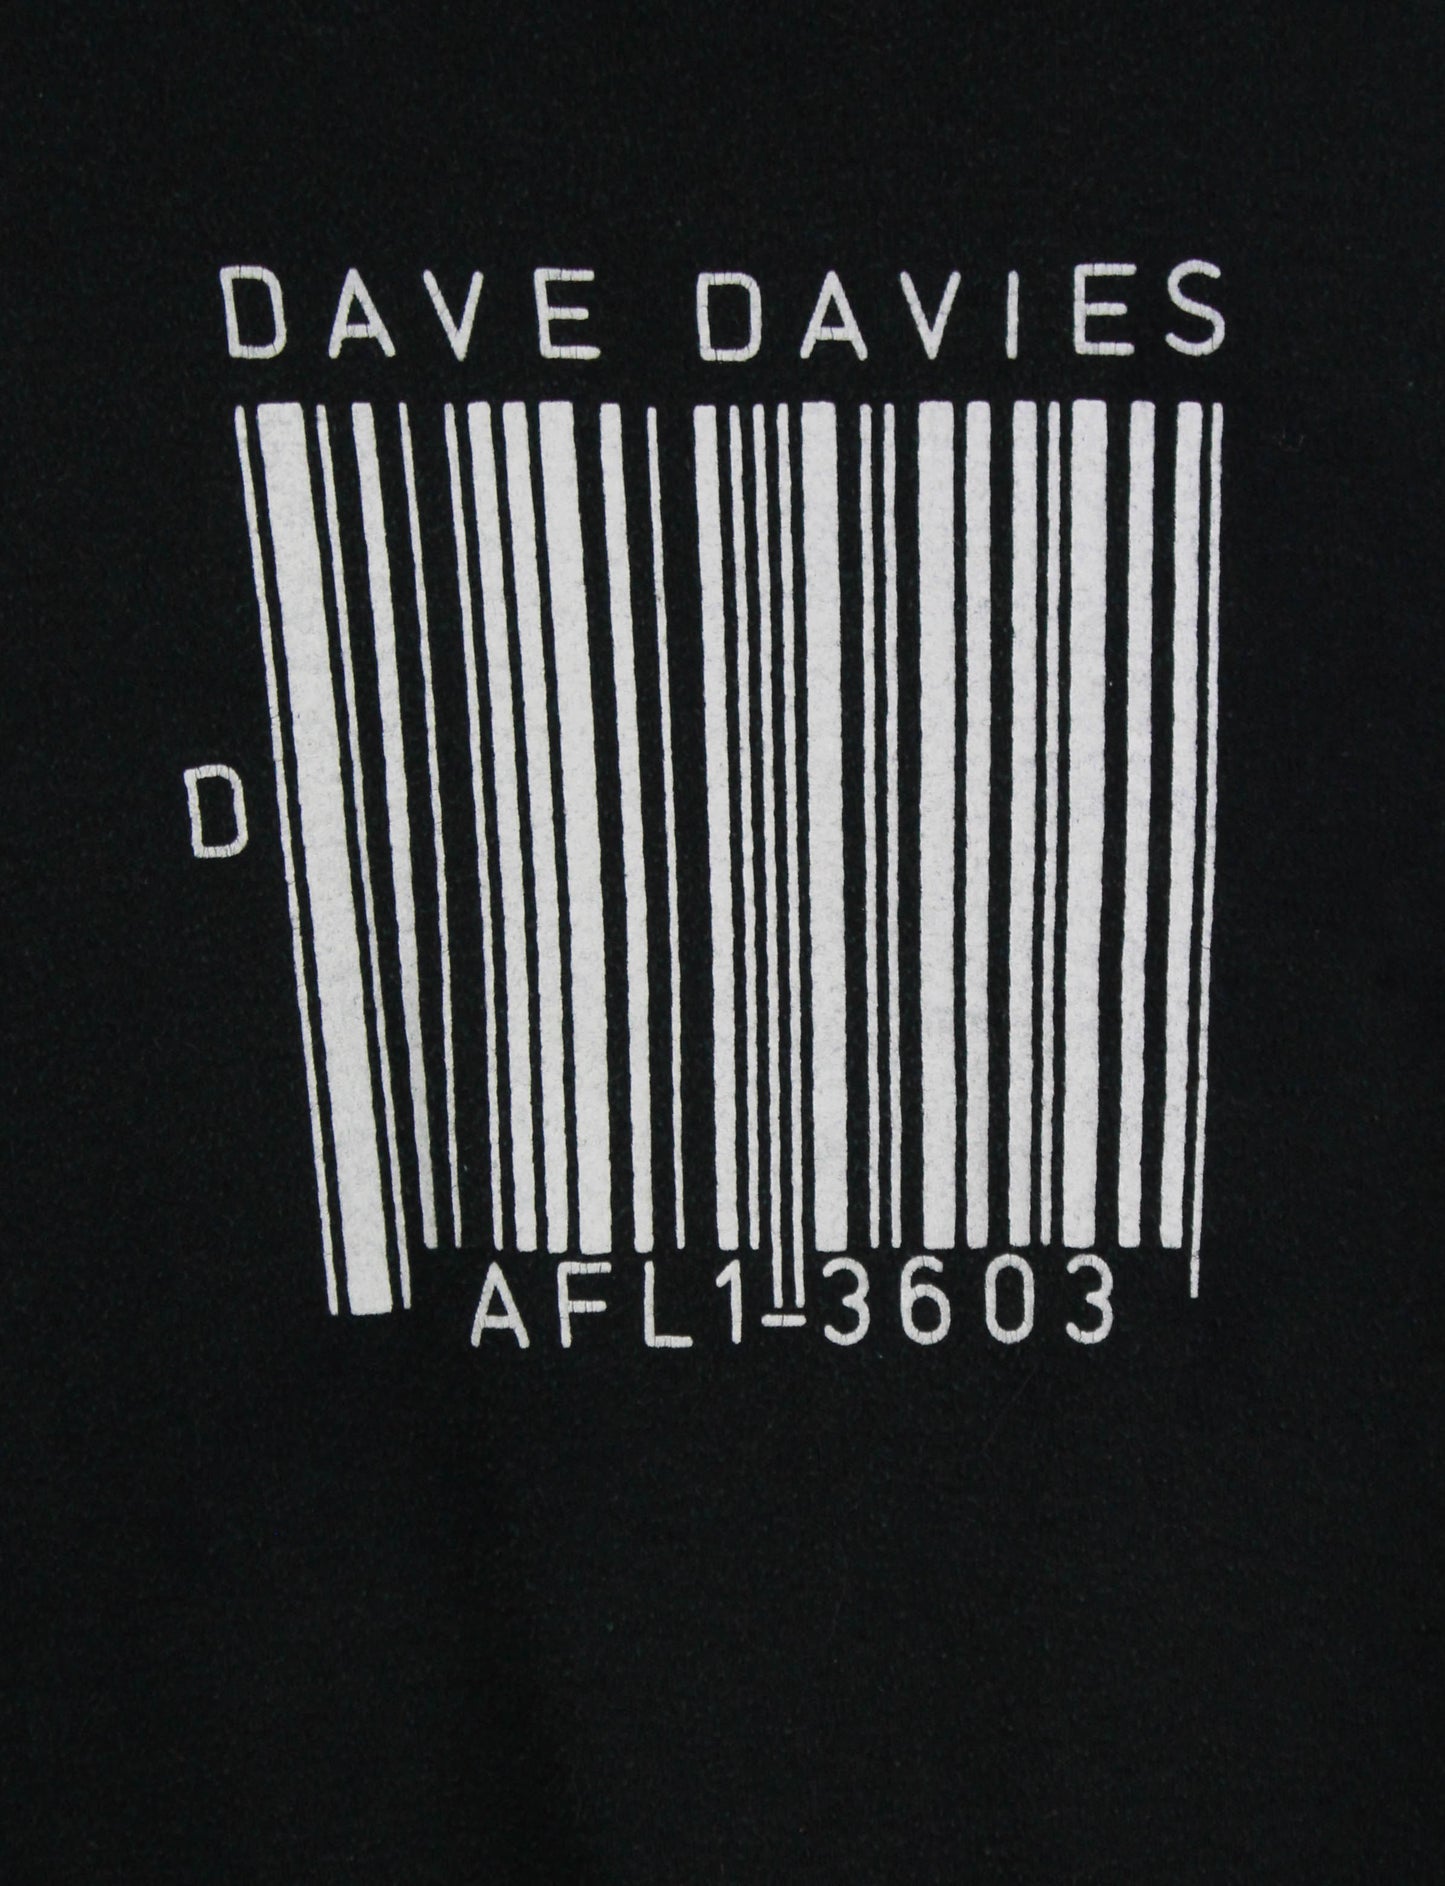 Vintage 1980 Dave Davies Concert T Shirt Promo Tee AFL 13603 Album The Kinks Black Unisex Small/Medium